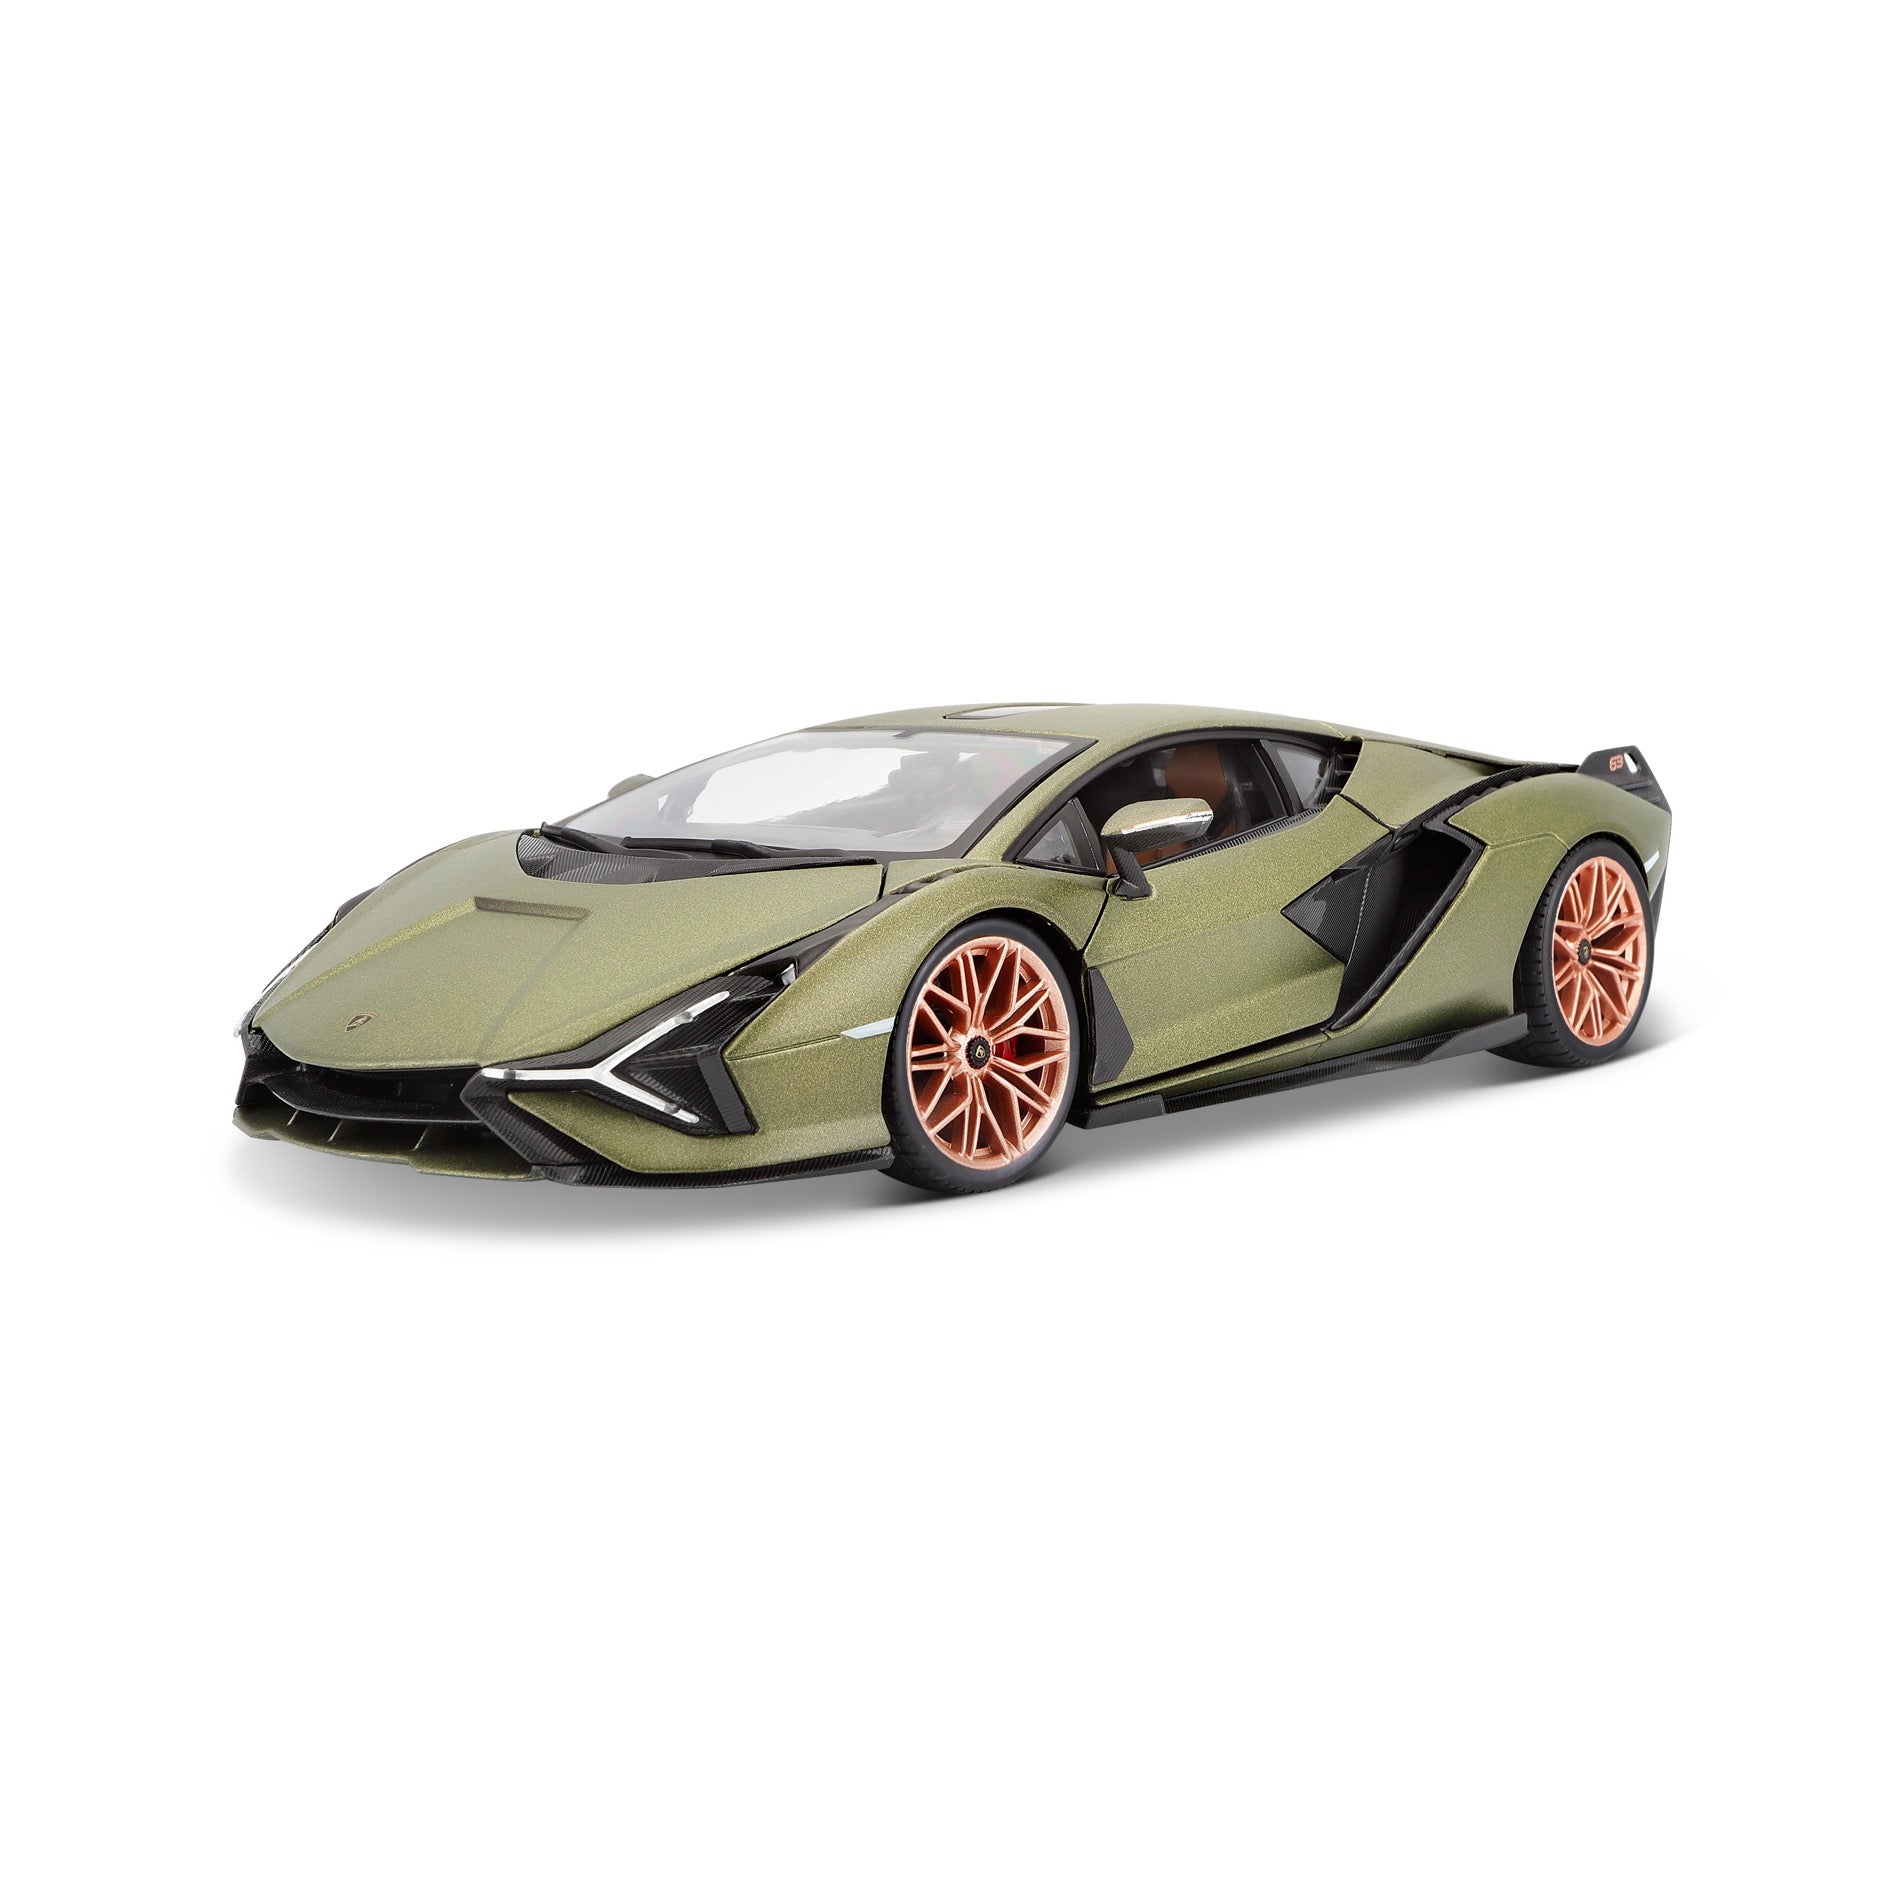 18-11046 Bburago - Lamborghini Sin FKP 37 Metal Matt Green - 1:18